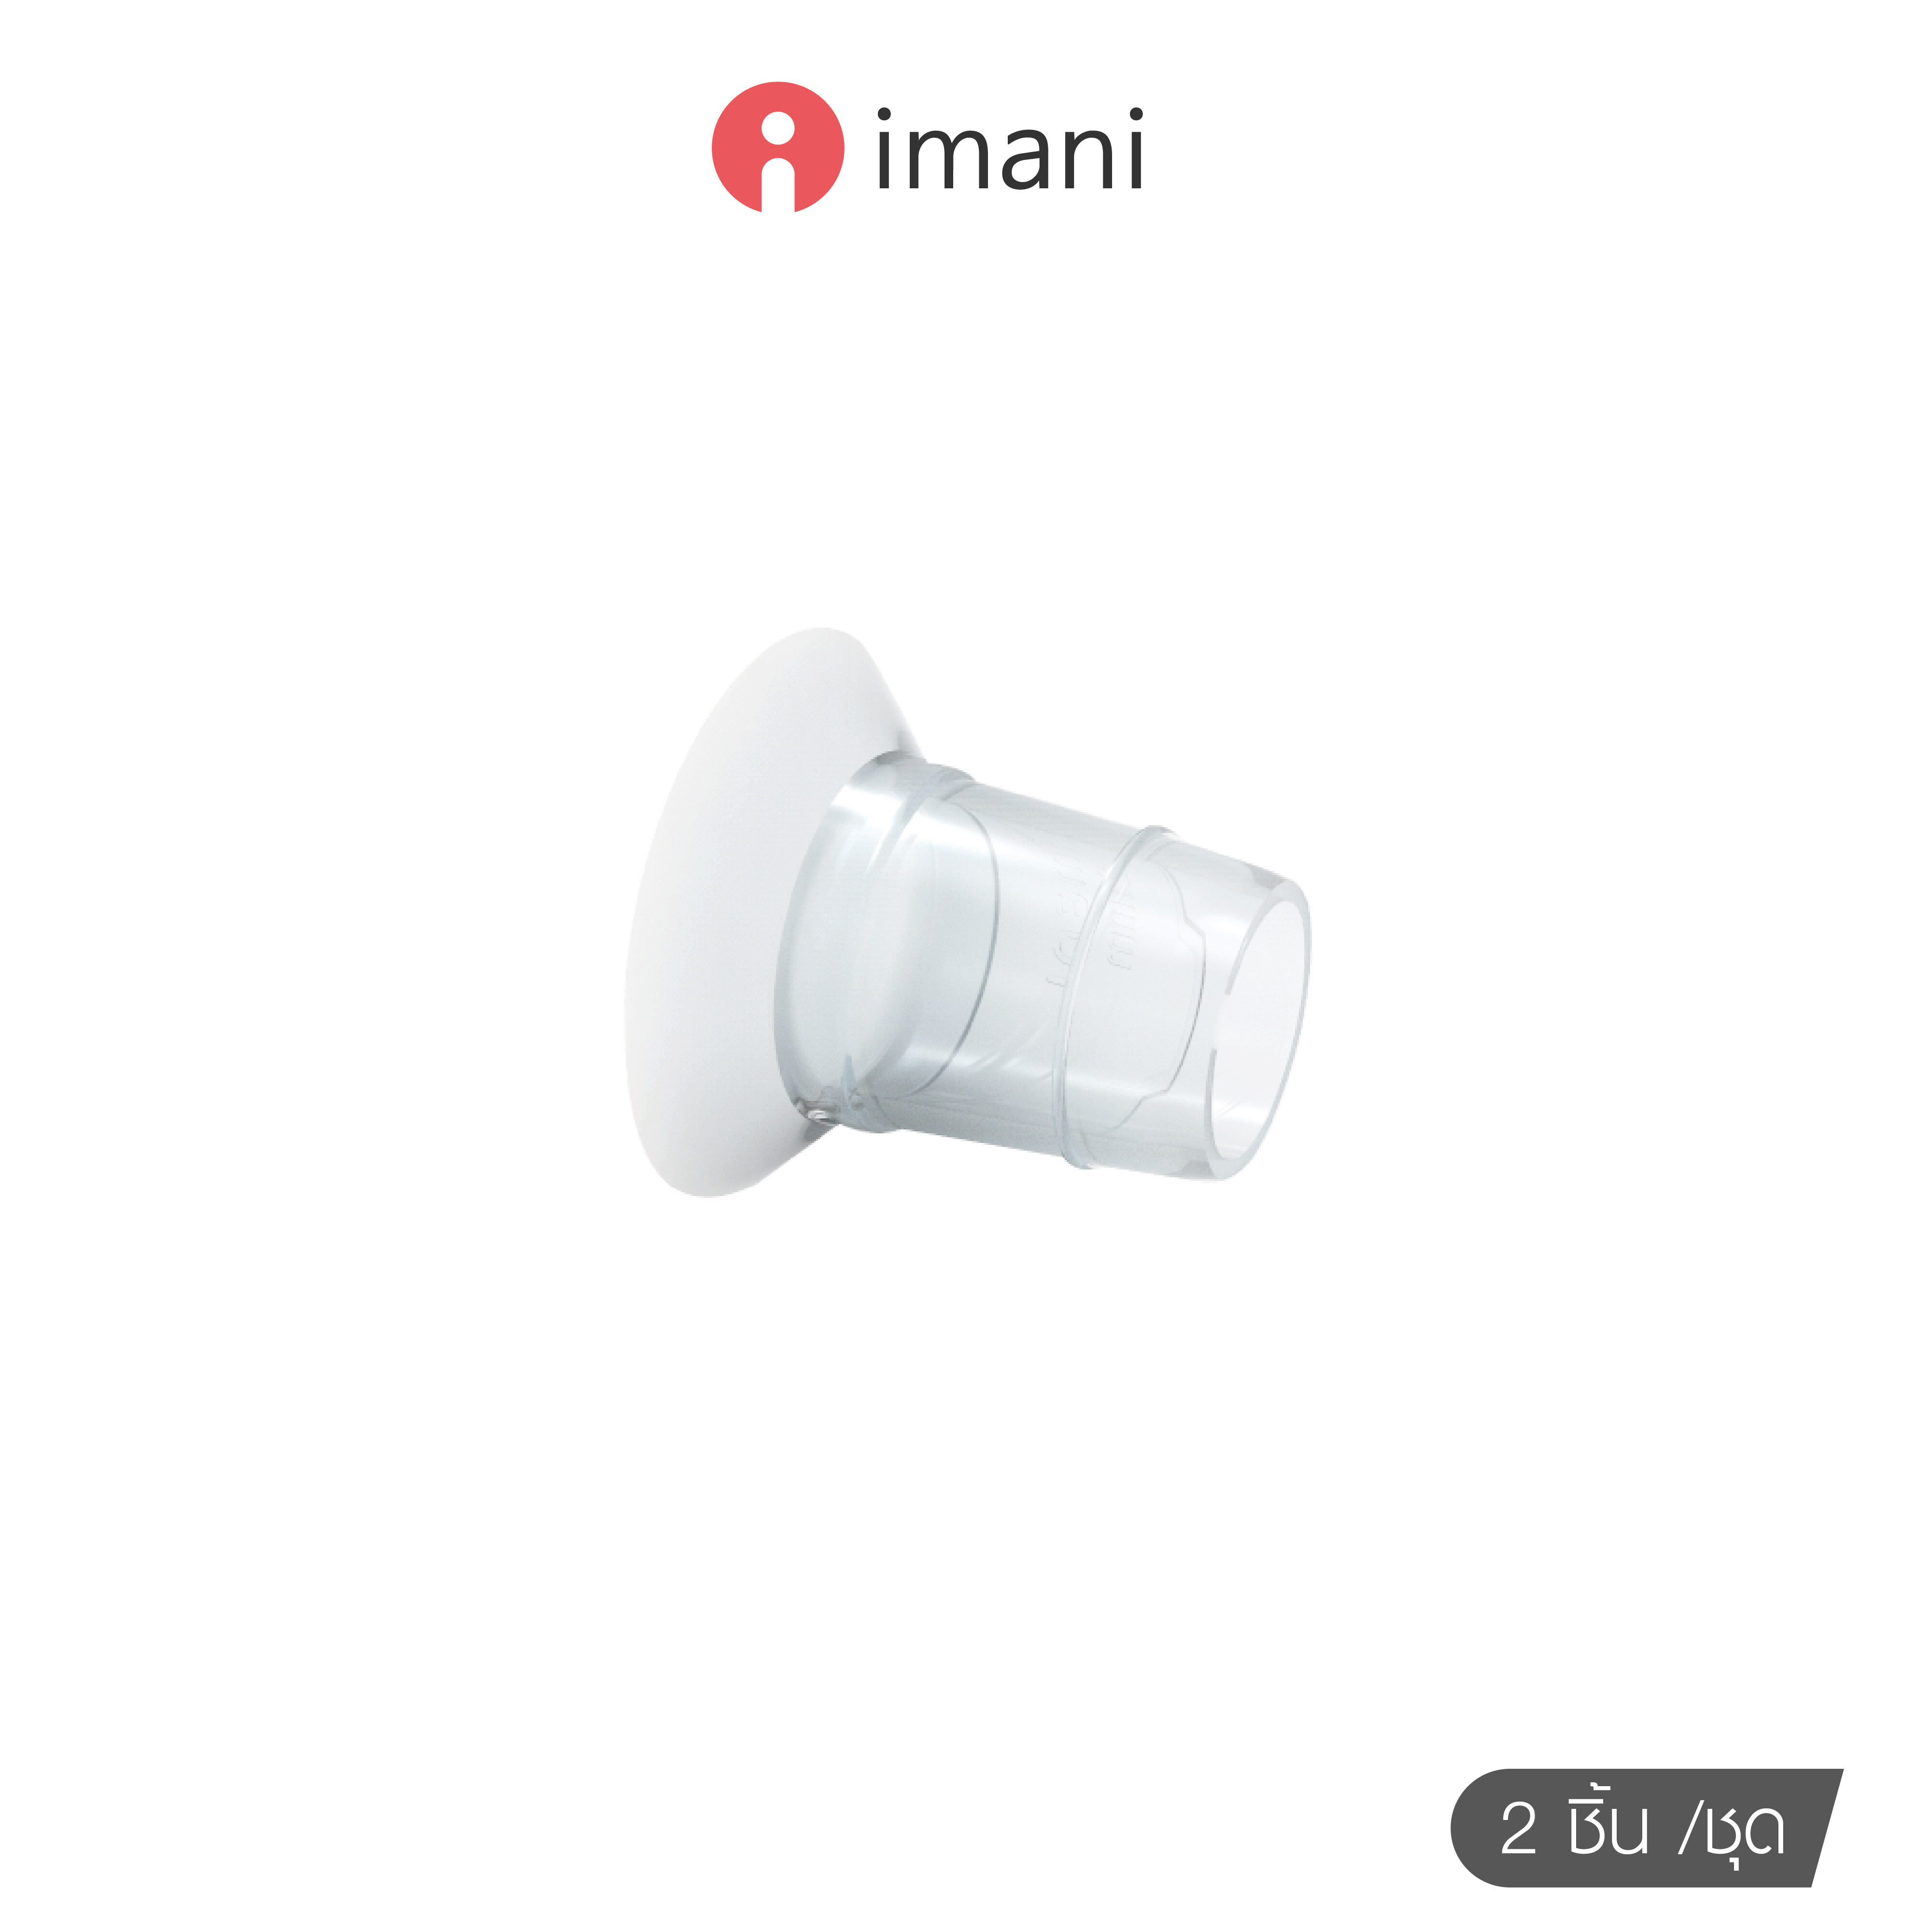 imani กรวยสอดลดขนาด สำหรับลดขนาดกรวยปั๊มนม มีให้เลือก 2 ขนาด 19mm / 21mm [2ชิ้น/กล่อง]